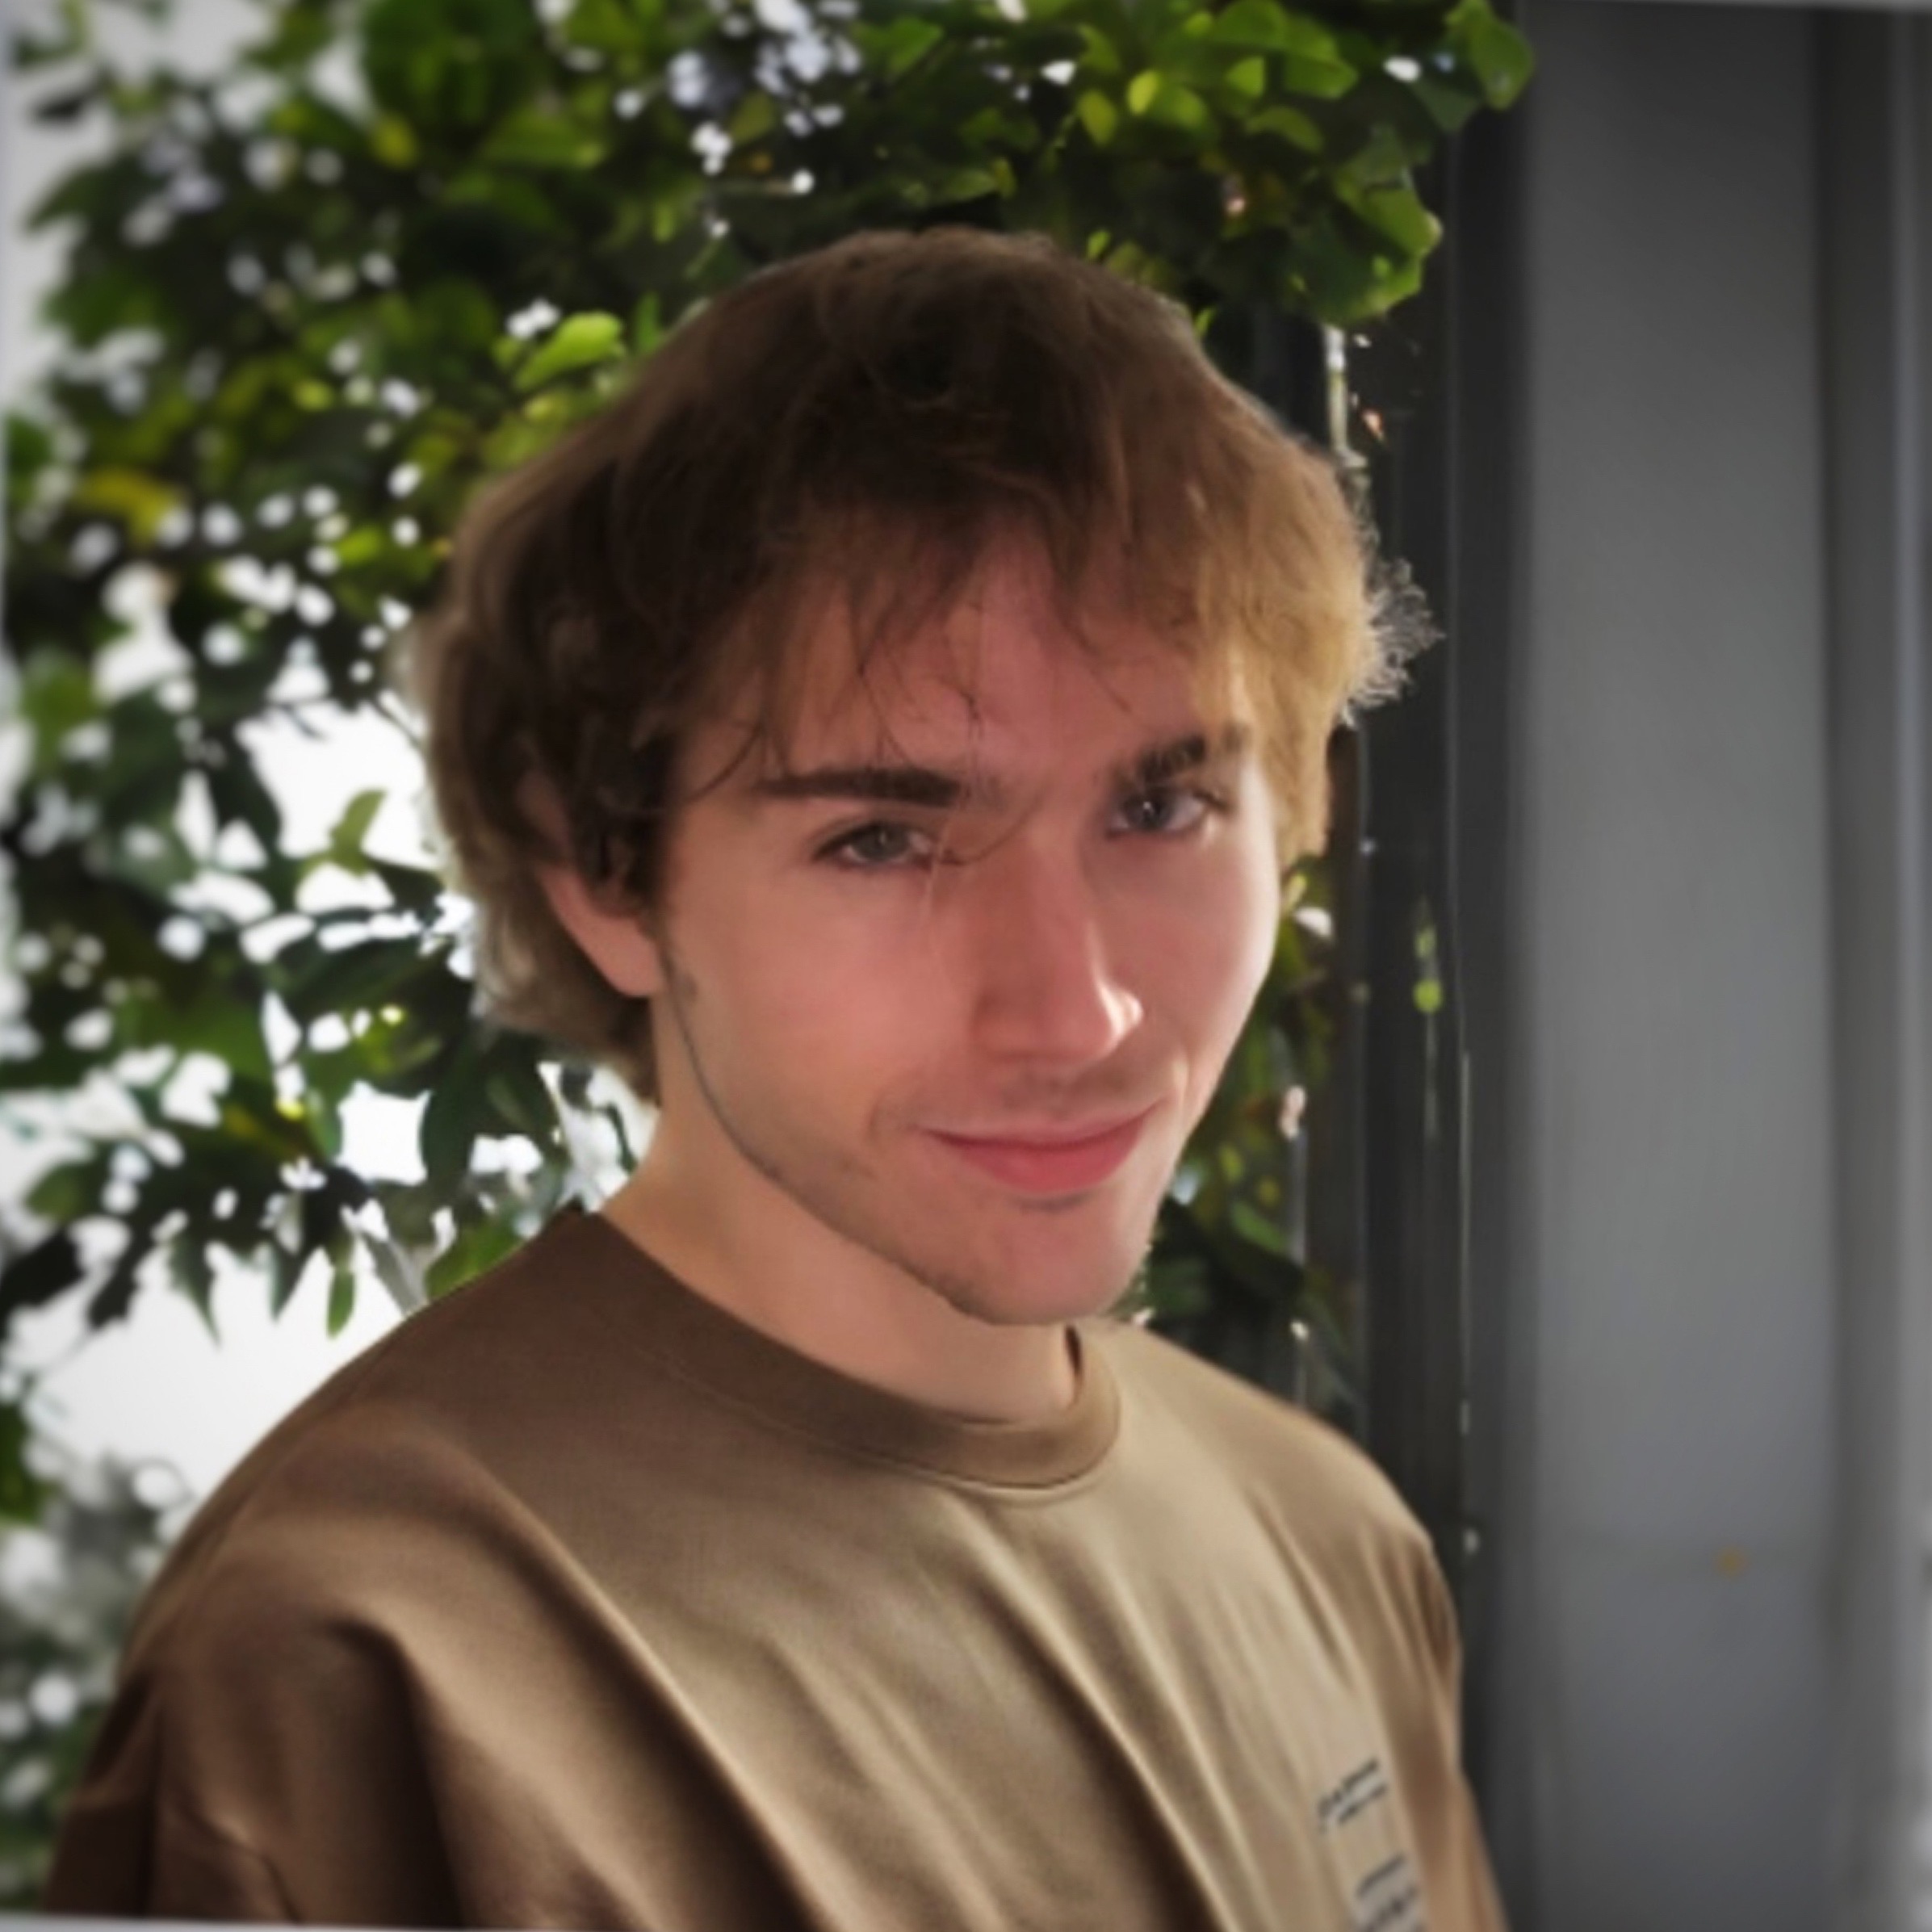 A headshot photo of Logan Jorgensen (me) in a brown shirt